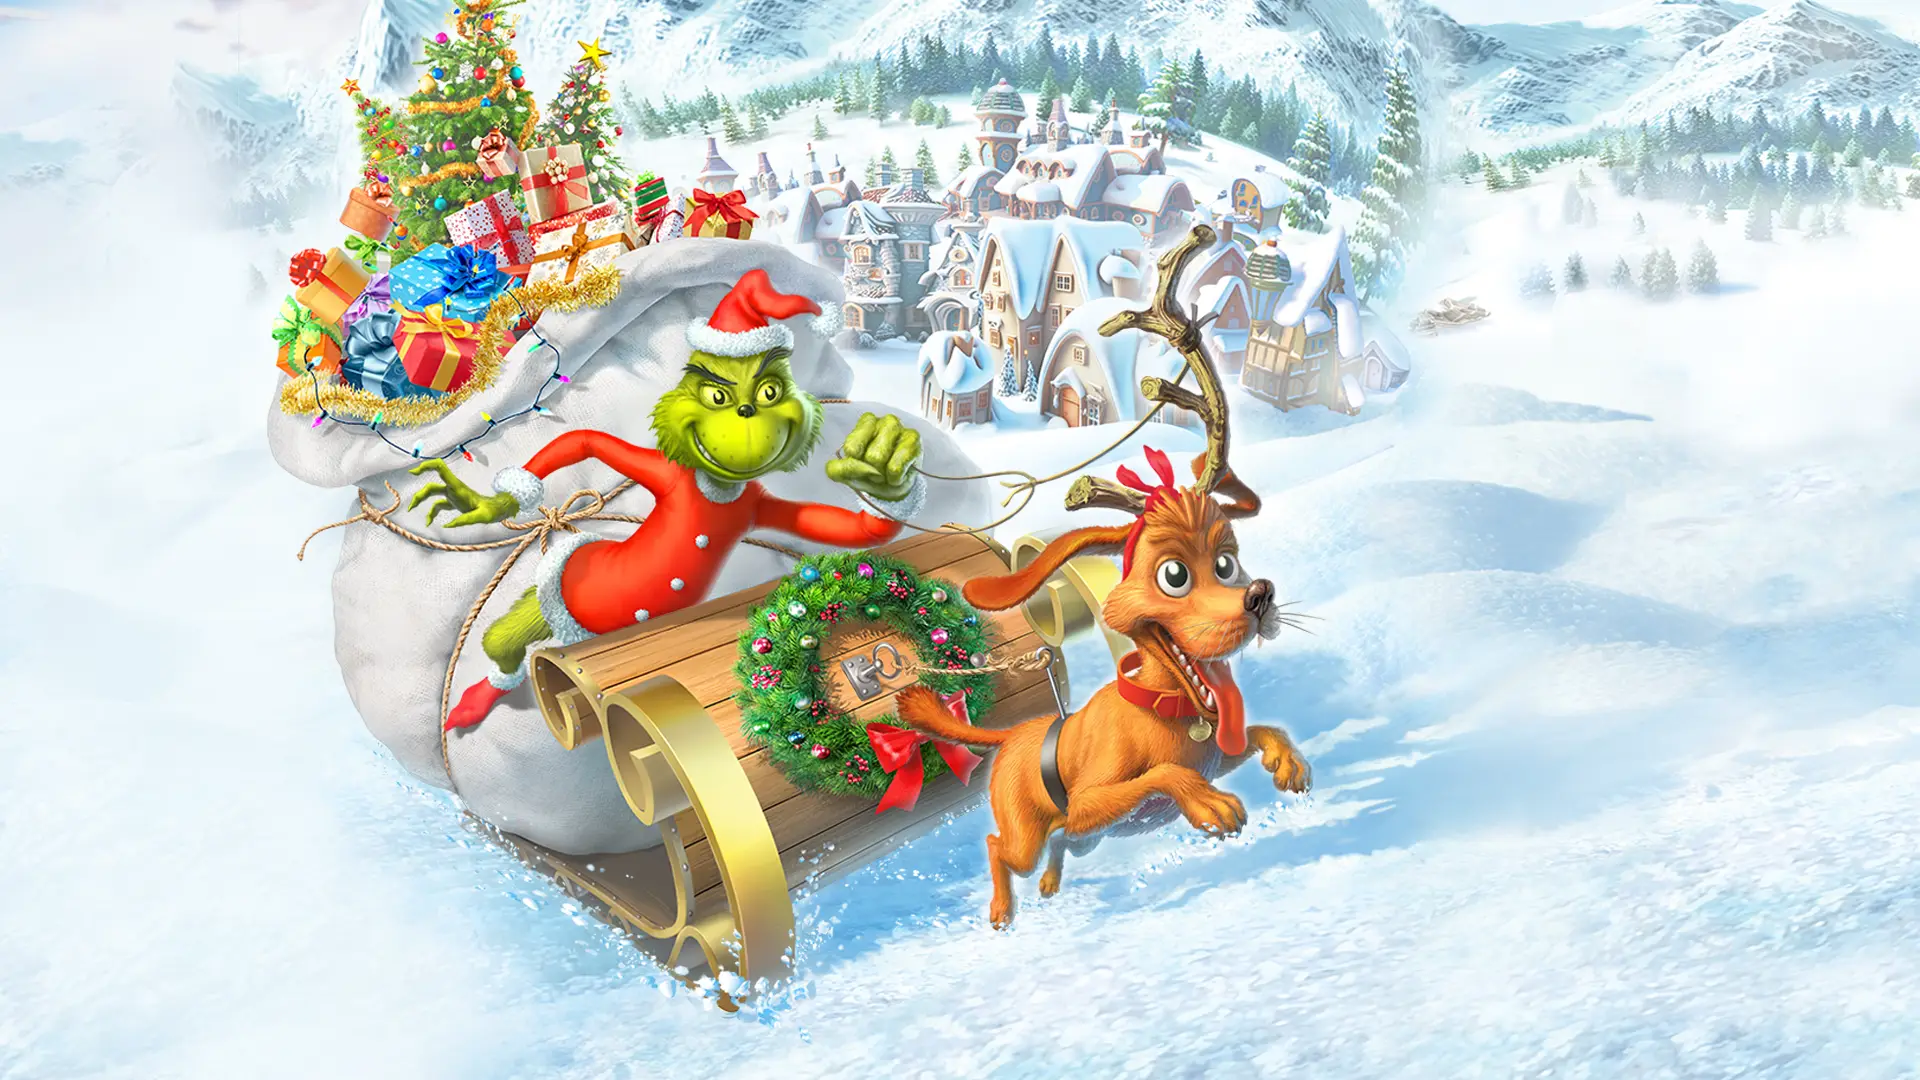 The Grinch: Christmas Adventures  Jogos para a Nintendo Switch